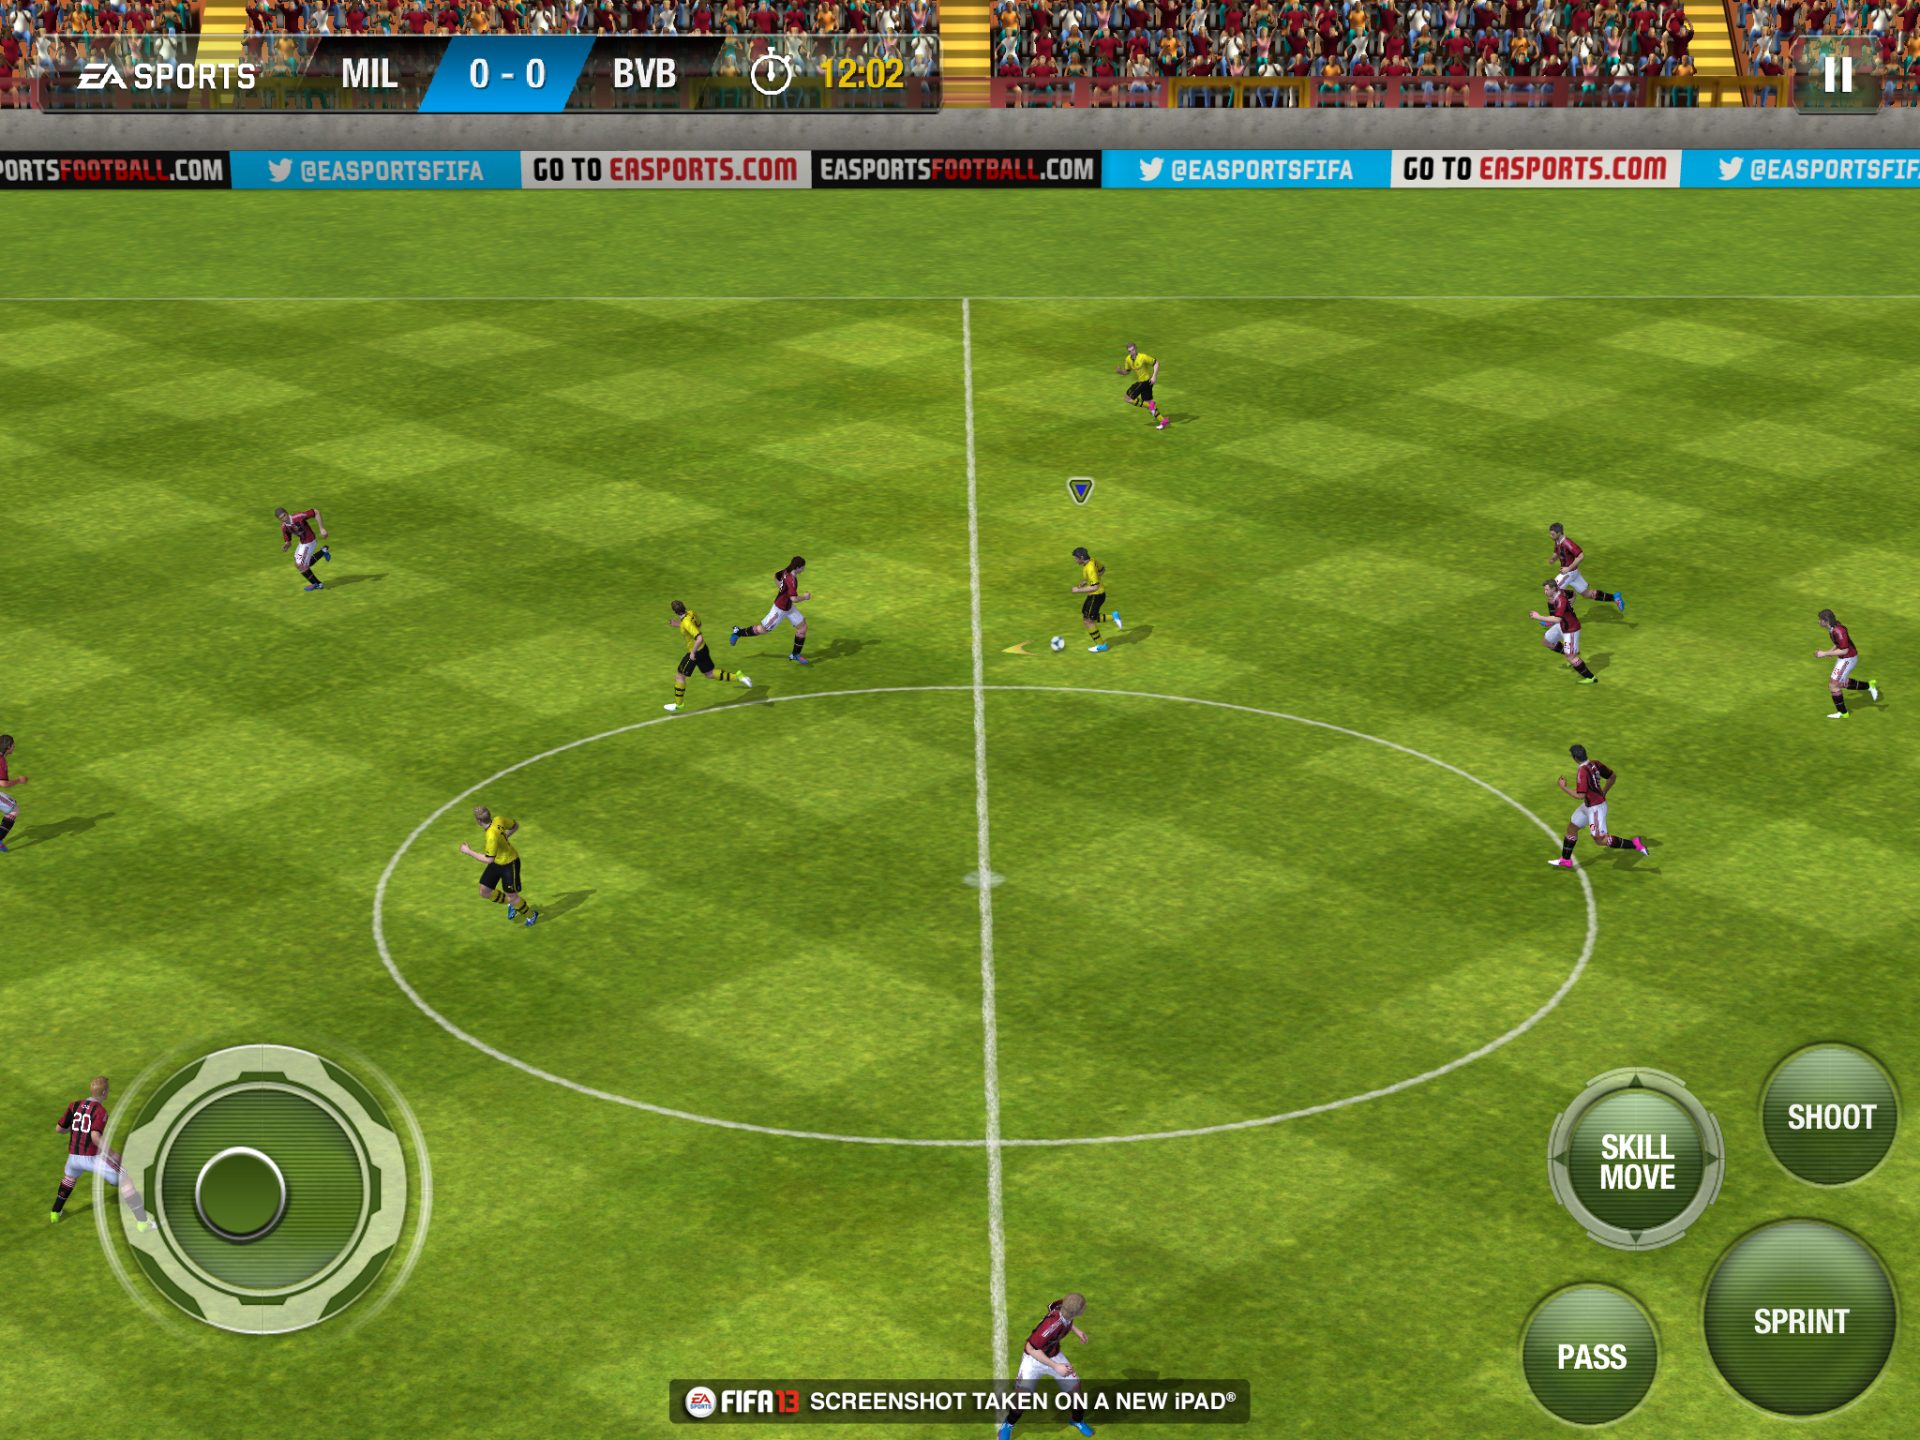 Obrázky z iOS verze FIFA 13 70833